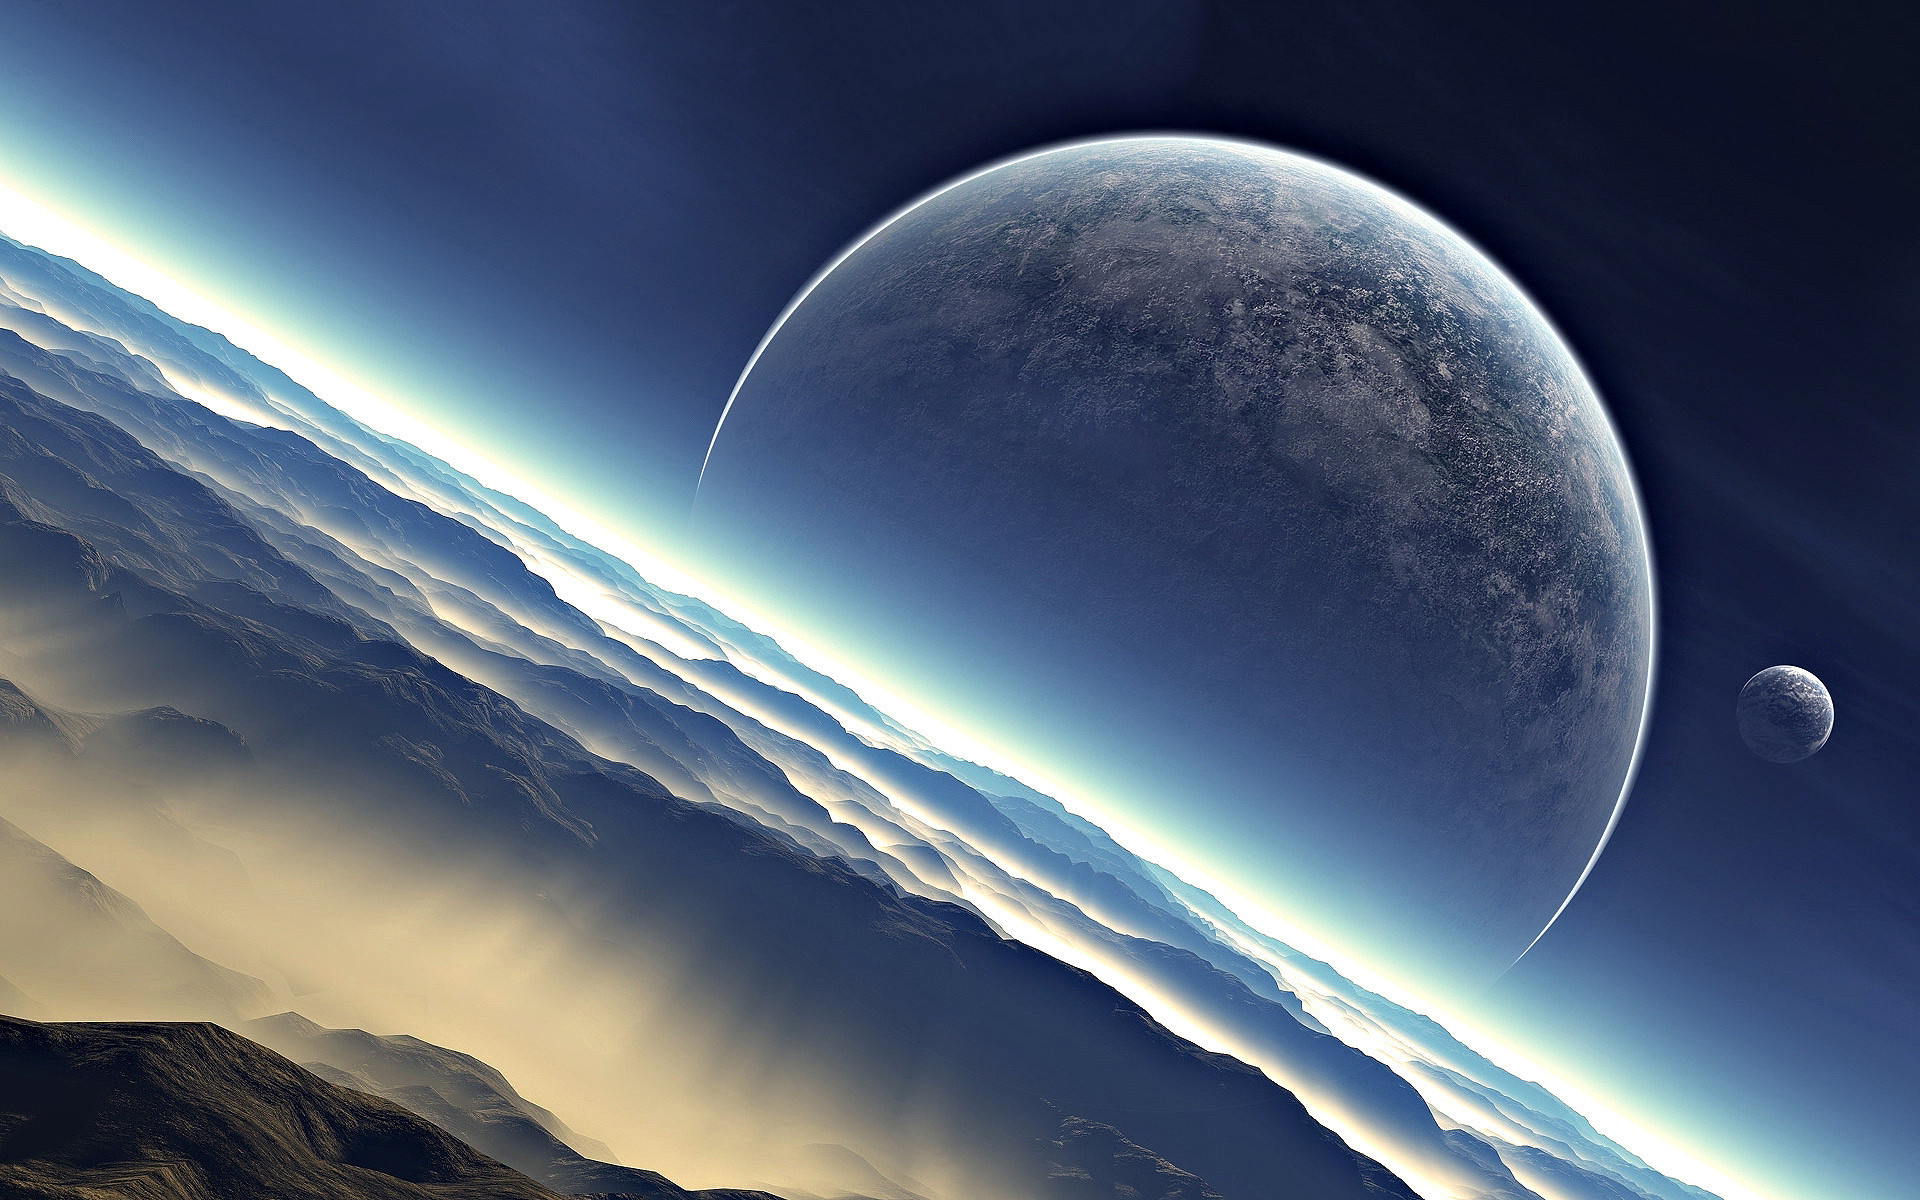 Planetrise on a distant planet